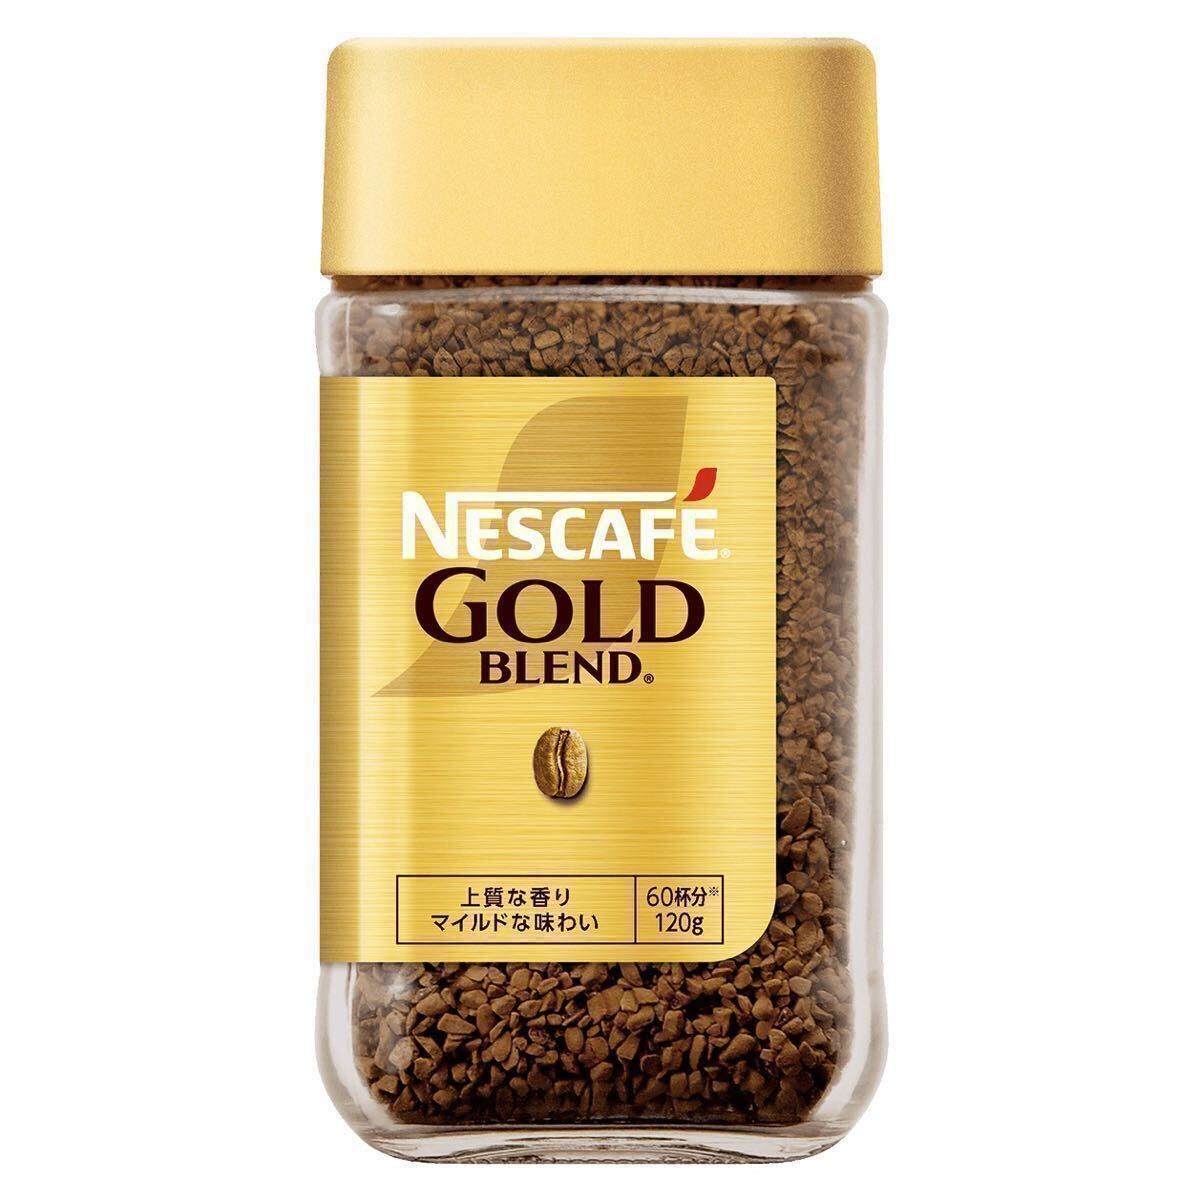  Nestle nes Cafe Gold Blend coffee mild bin 120g 24ps.@24 piece regular sleigh .bru coffee ..coffee best-before date 2025 year 10 month 